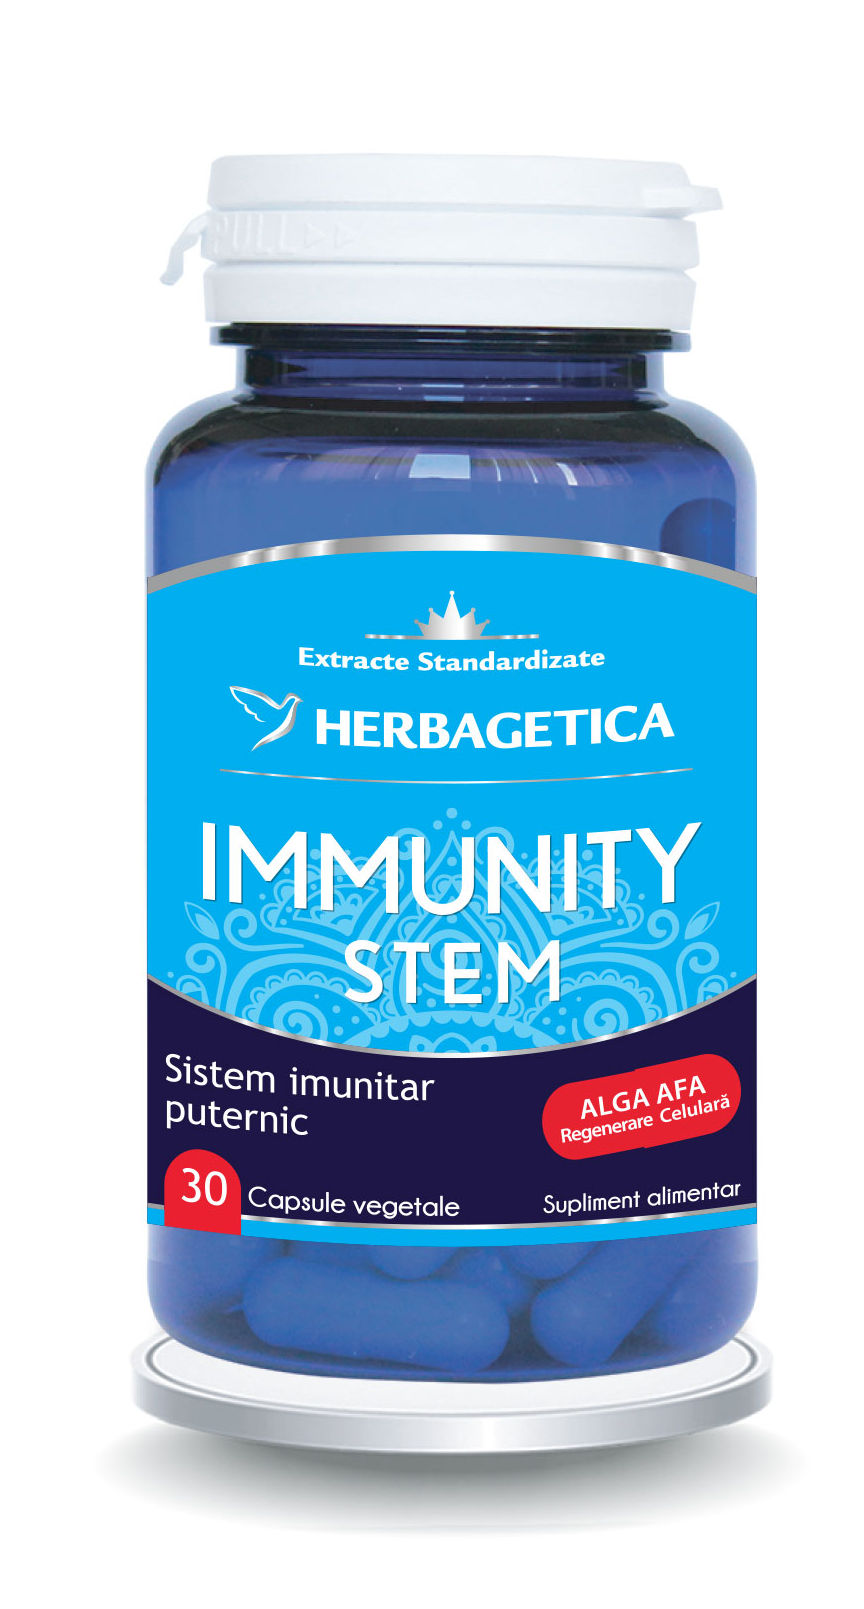 Immunity stem